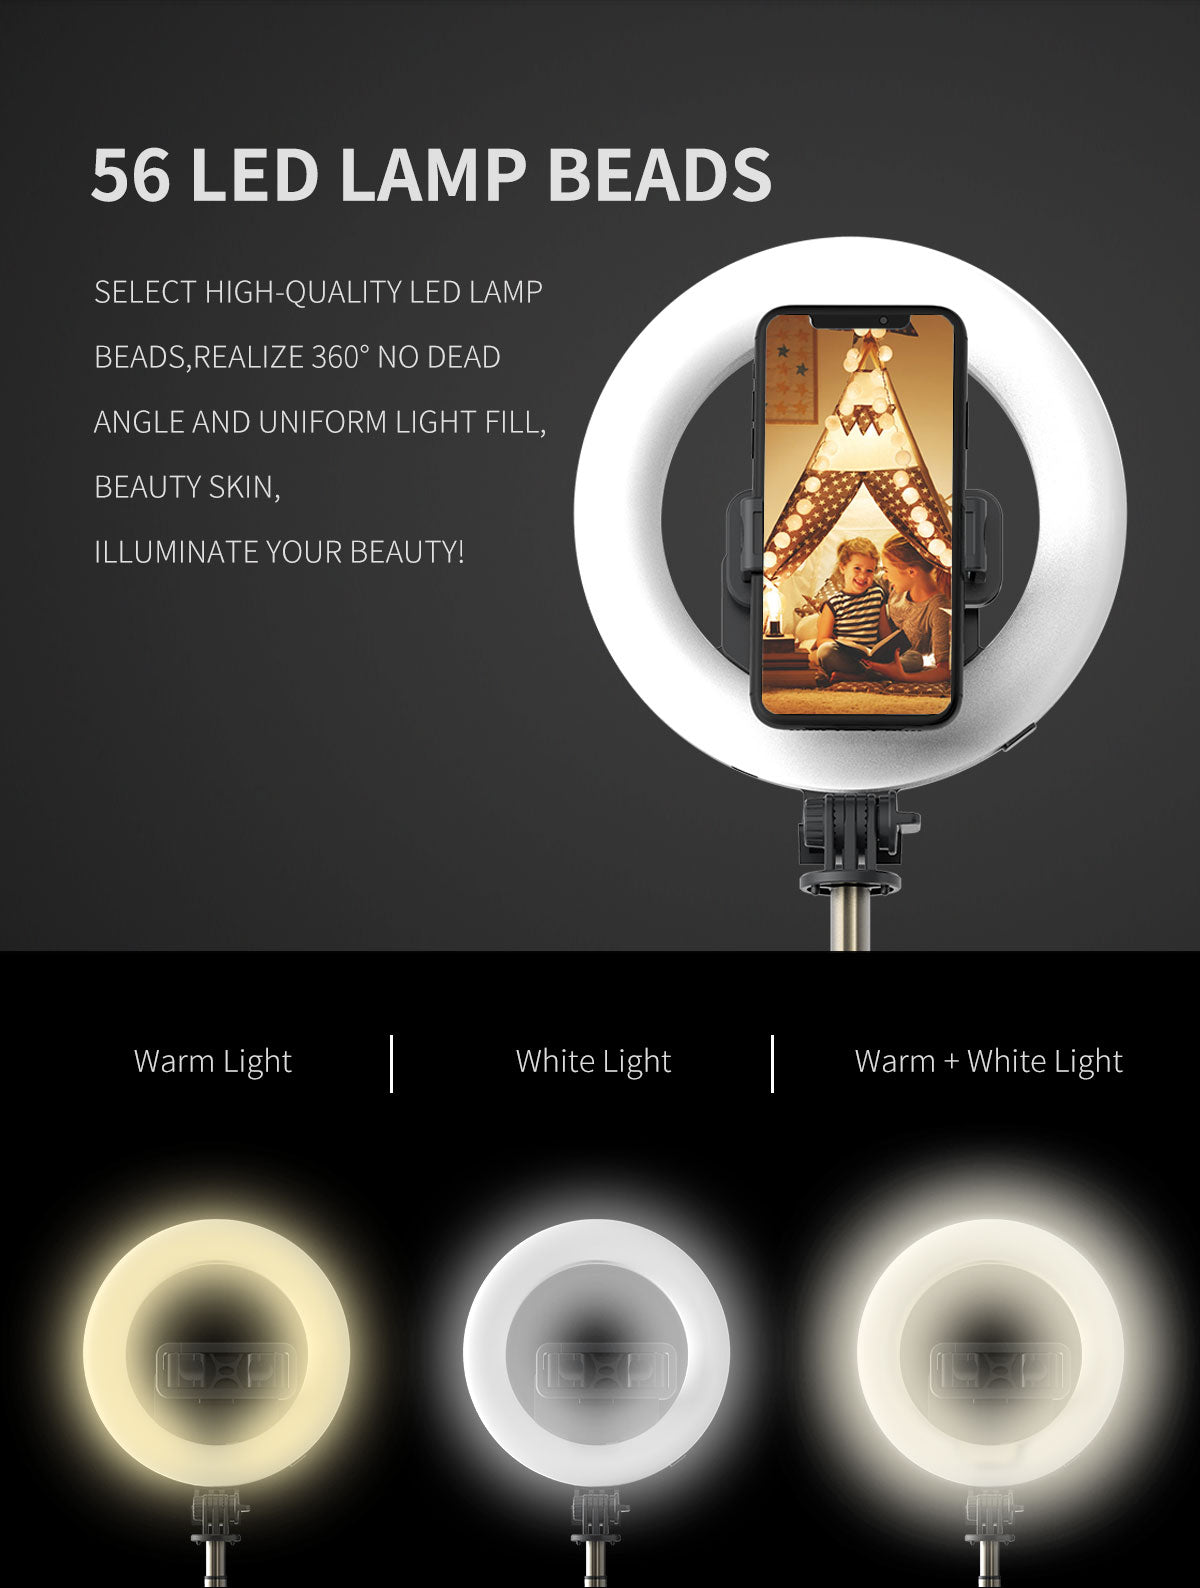 4 in 1 LED Ring Bluetooth Selfie Tripod